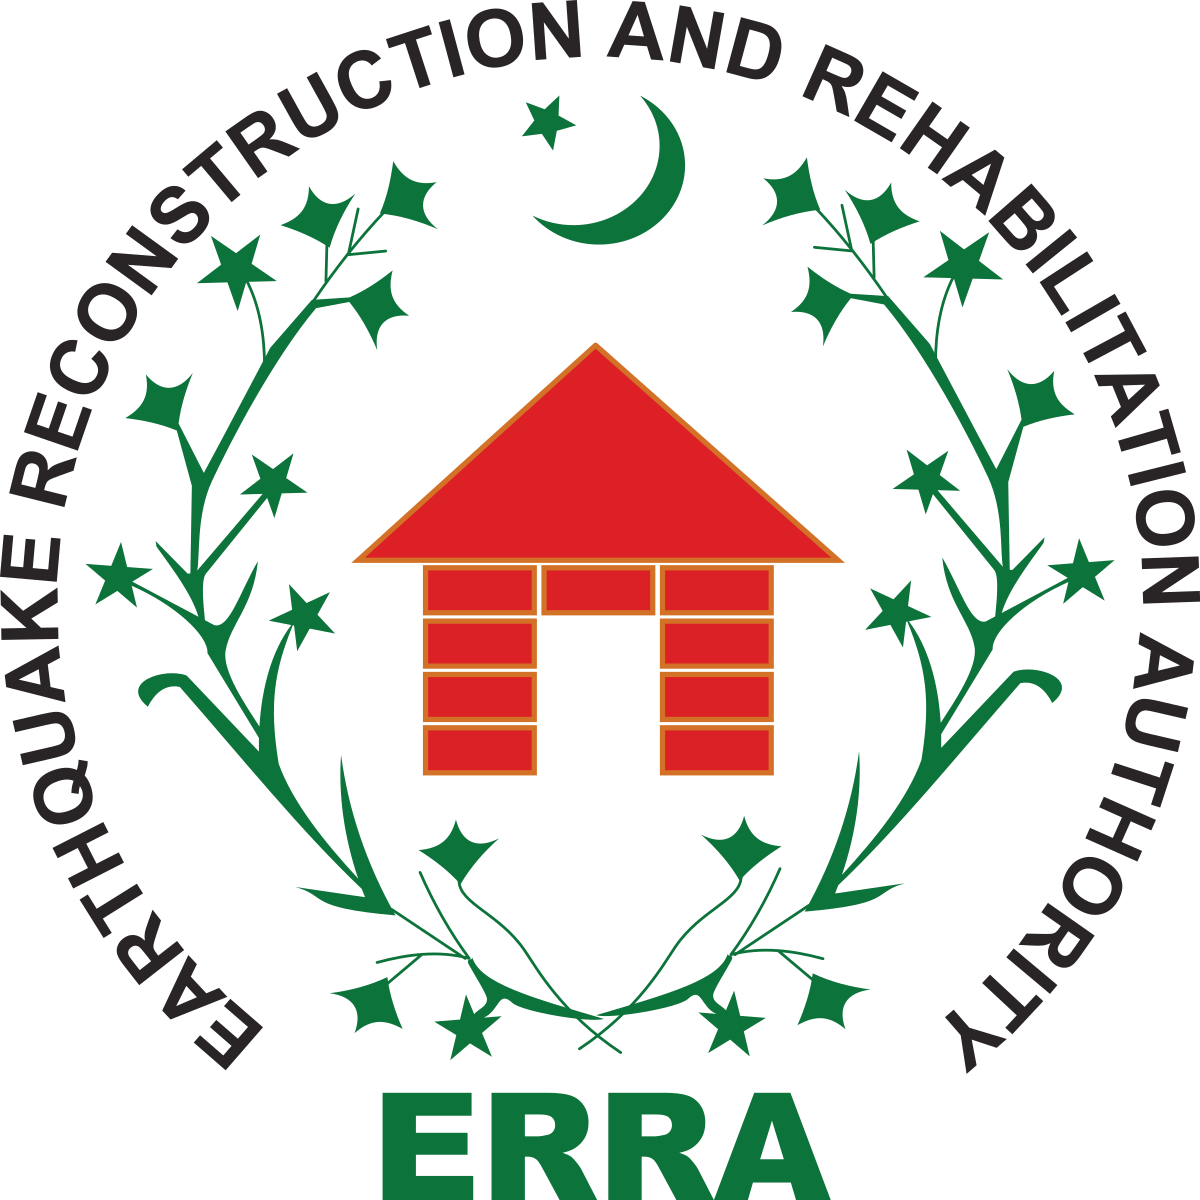 Earthquake Reconstruction and Rehabilitation Authority - Wikipedia1200 x 1200